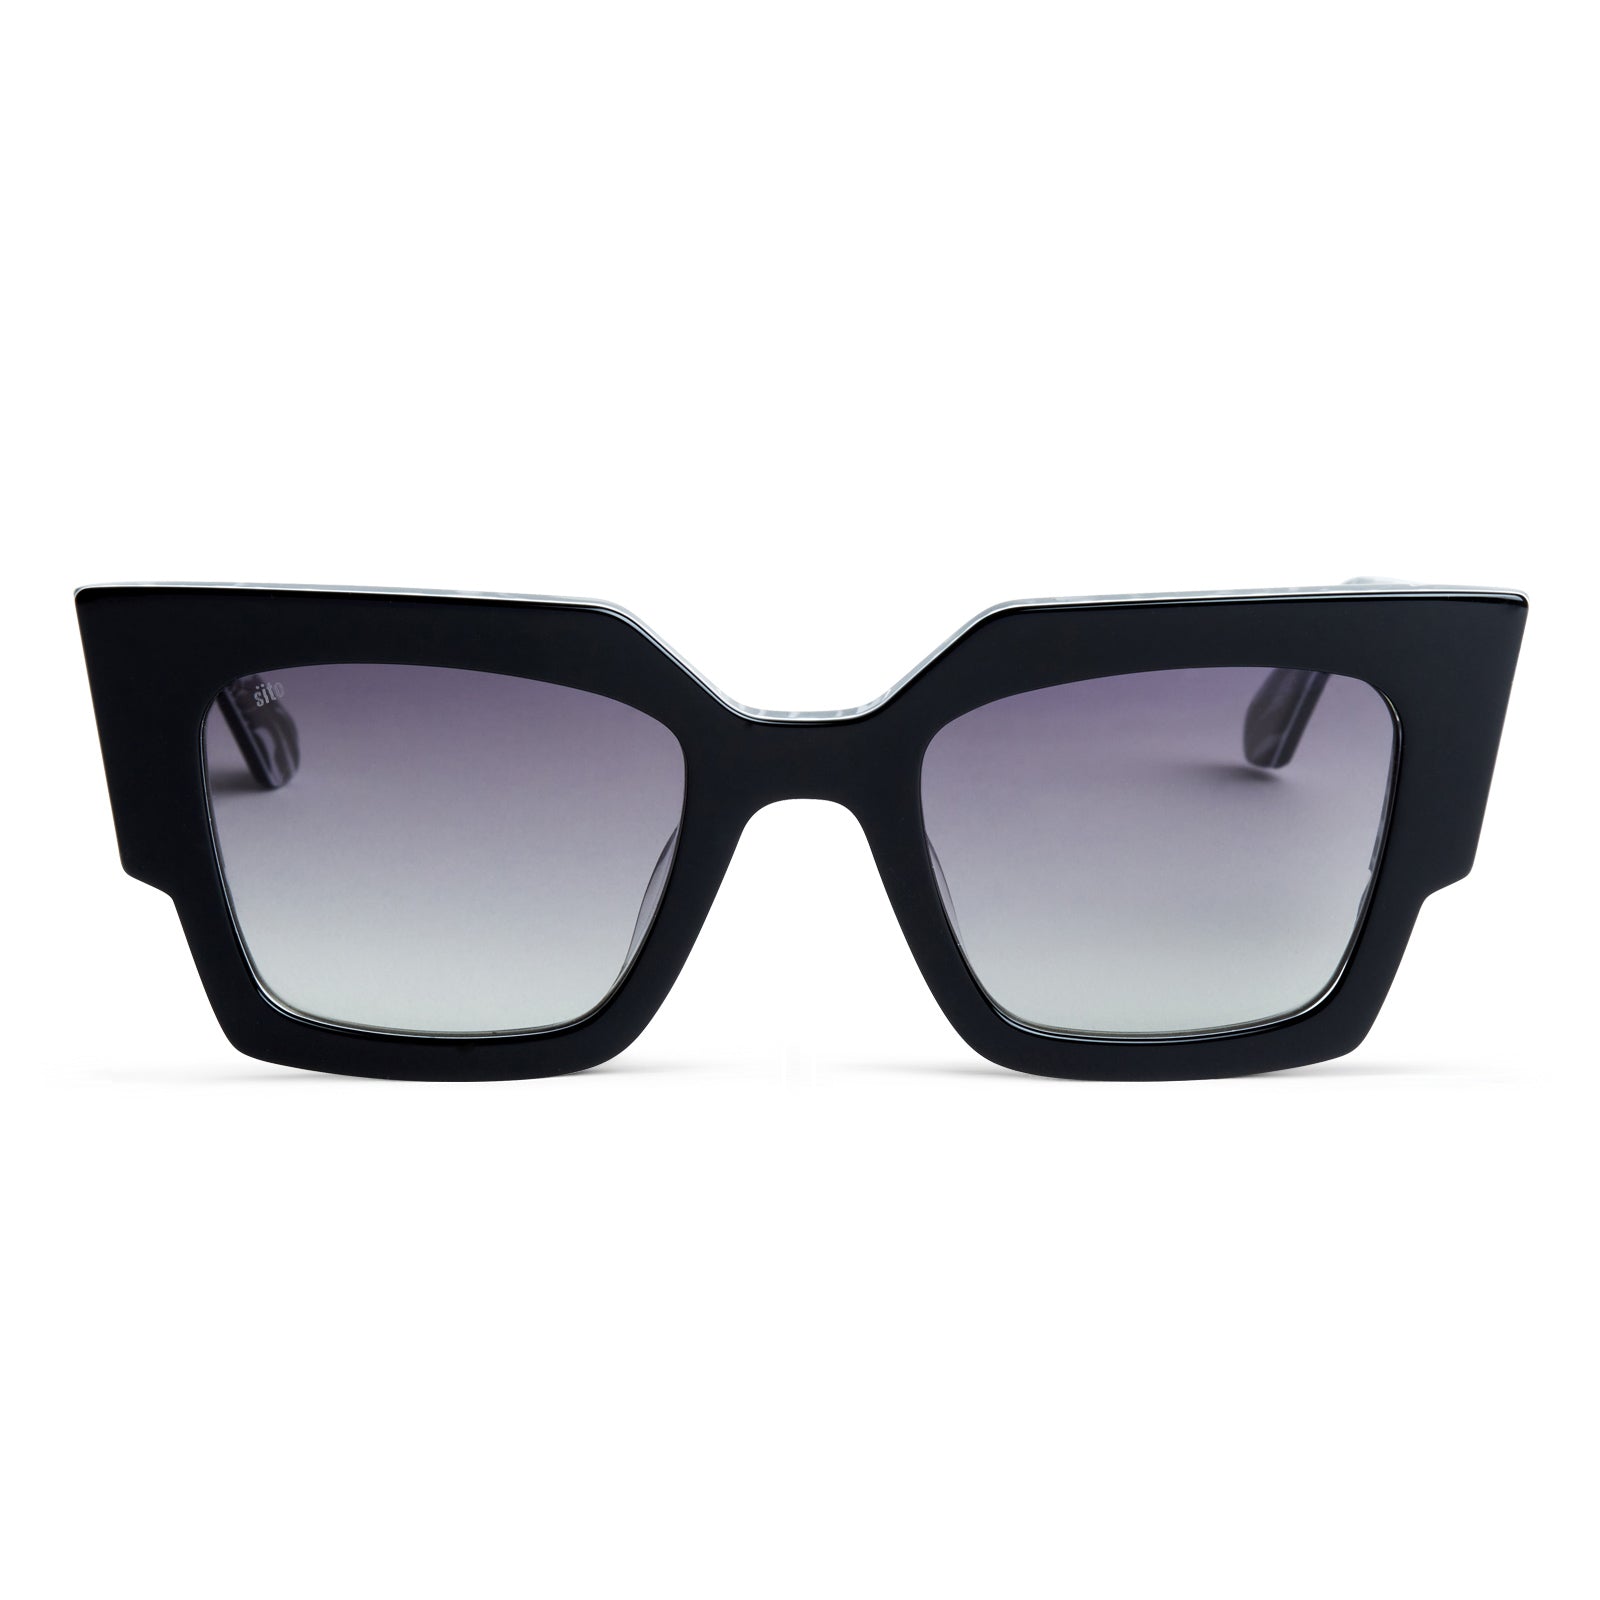 Sito Sensory Division Sunglasses BlackSafari SmokeGradient